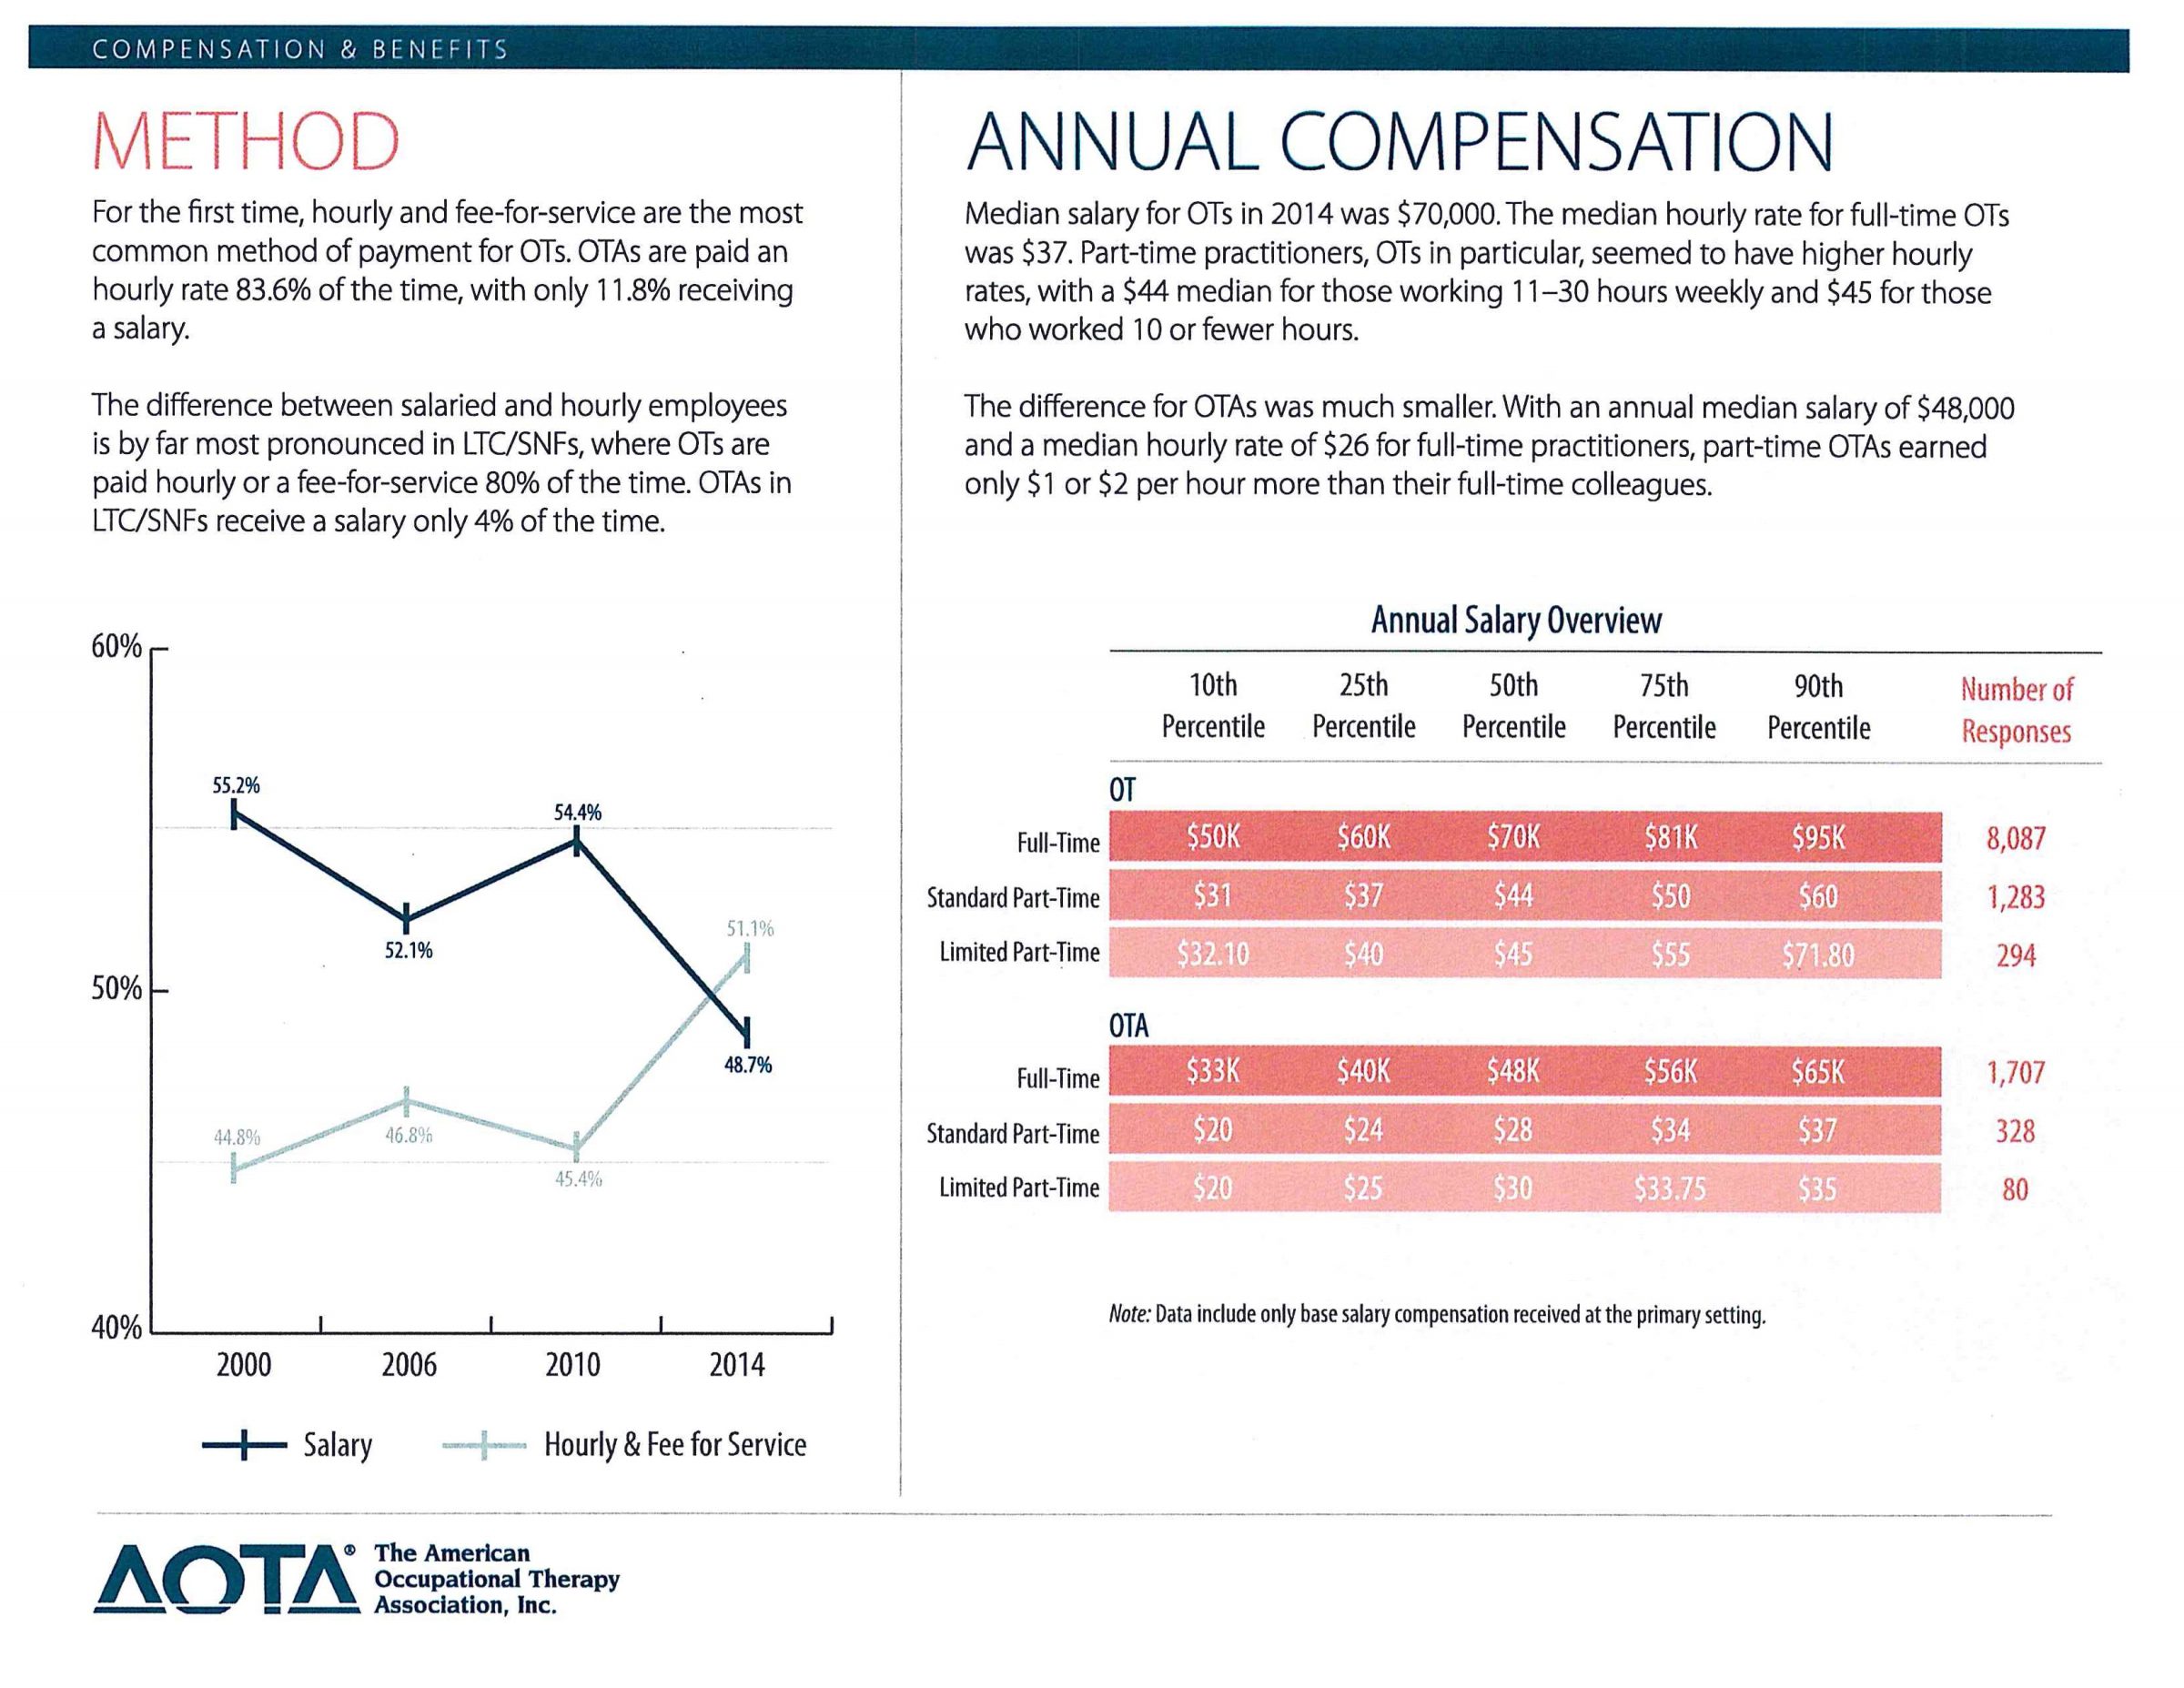 AOTA Compensation and Benefits graph